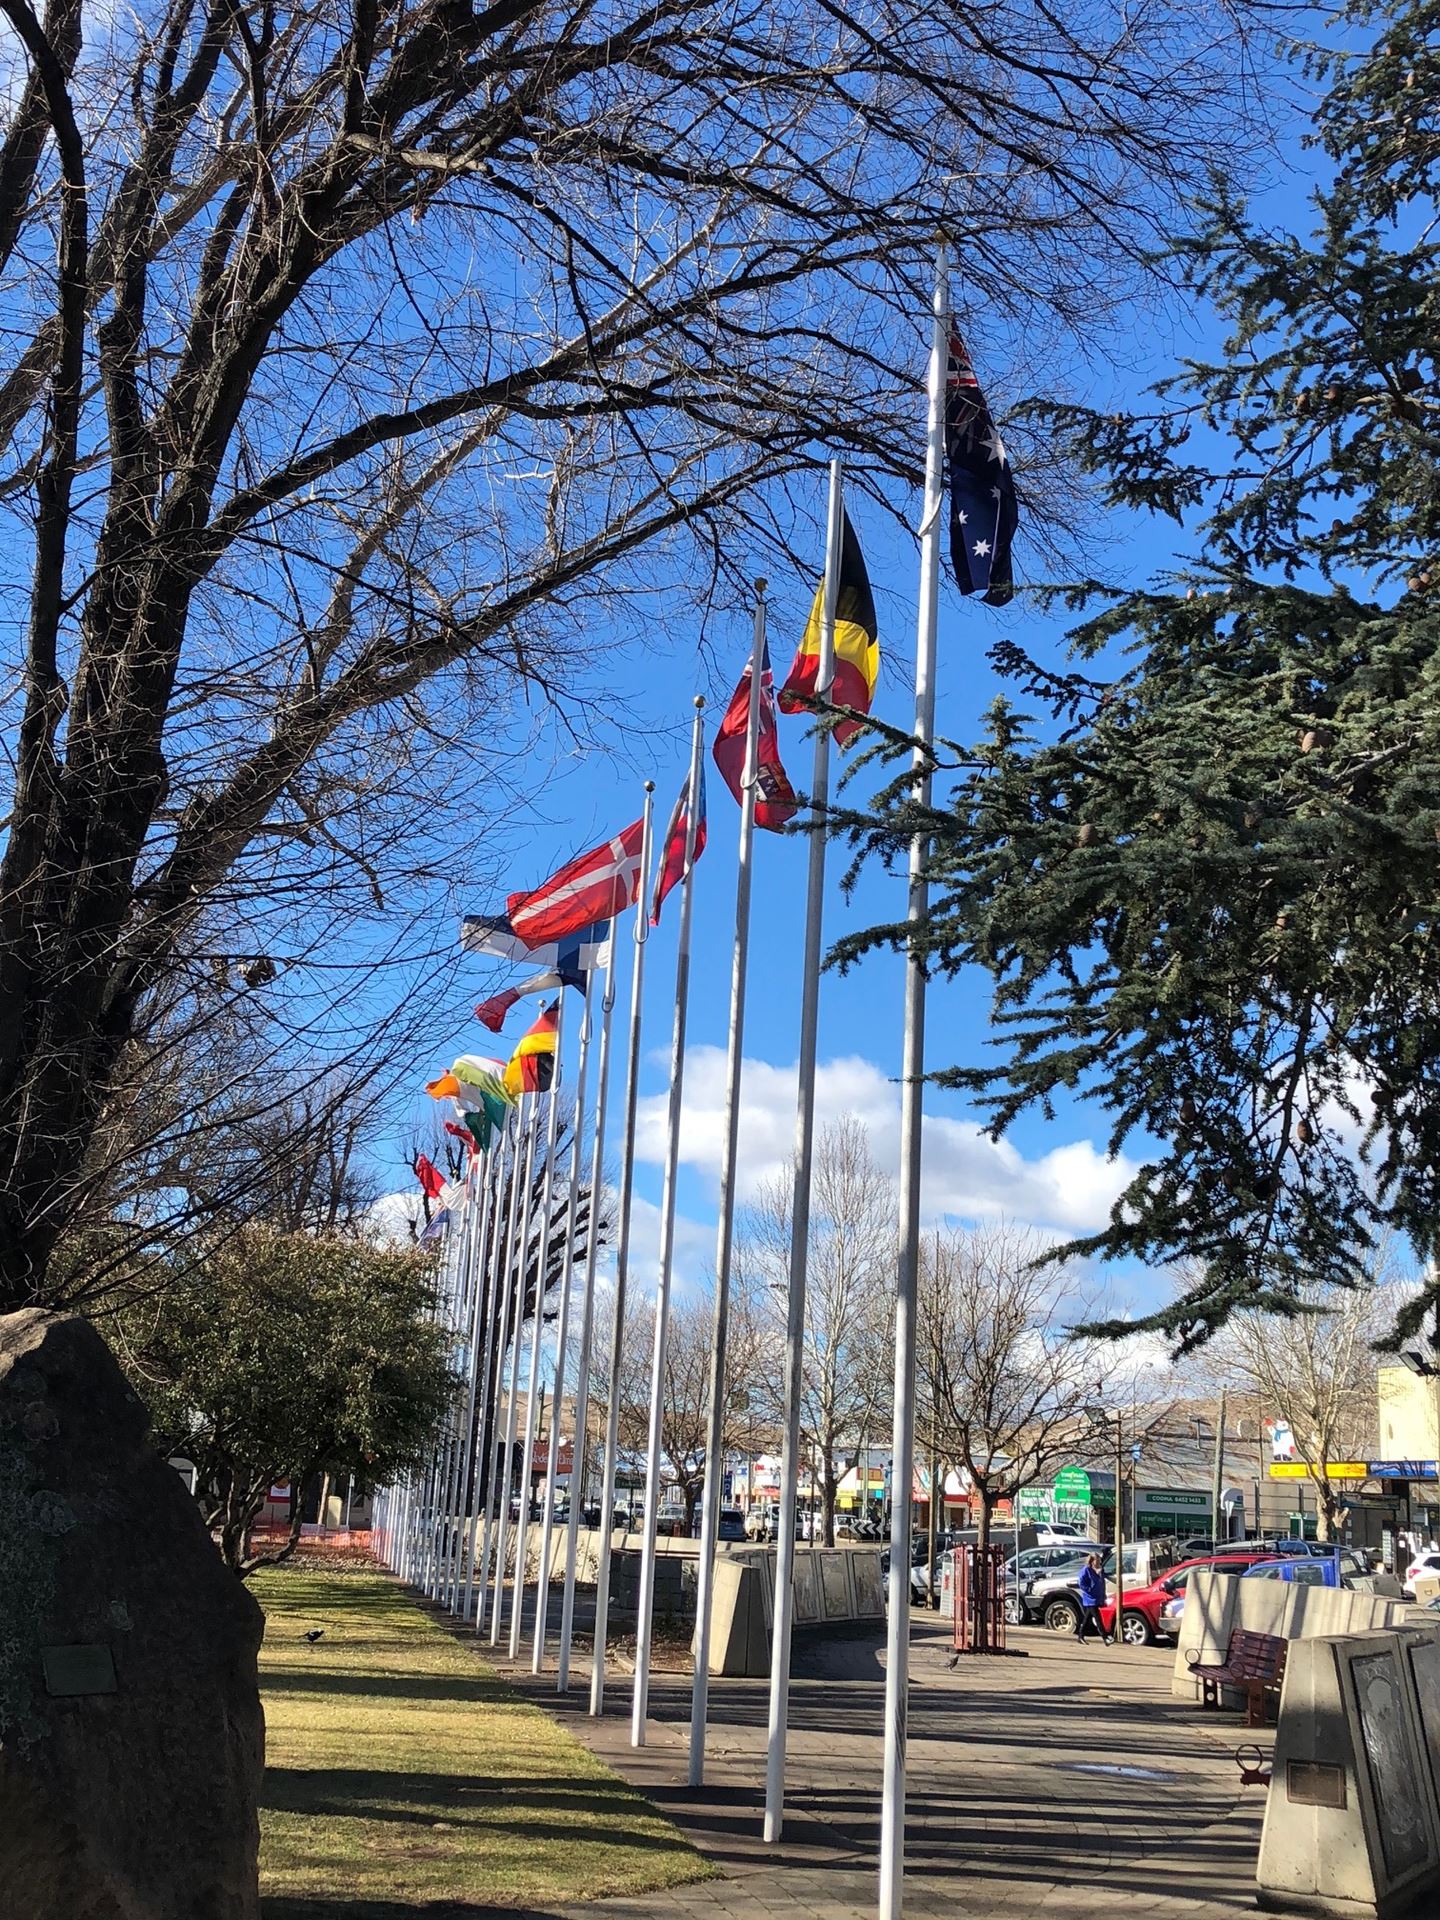 A shady Avenue of flags